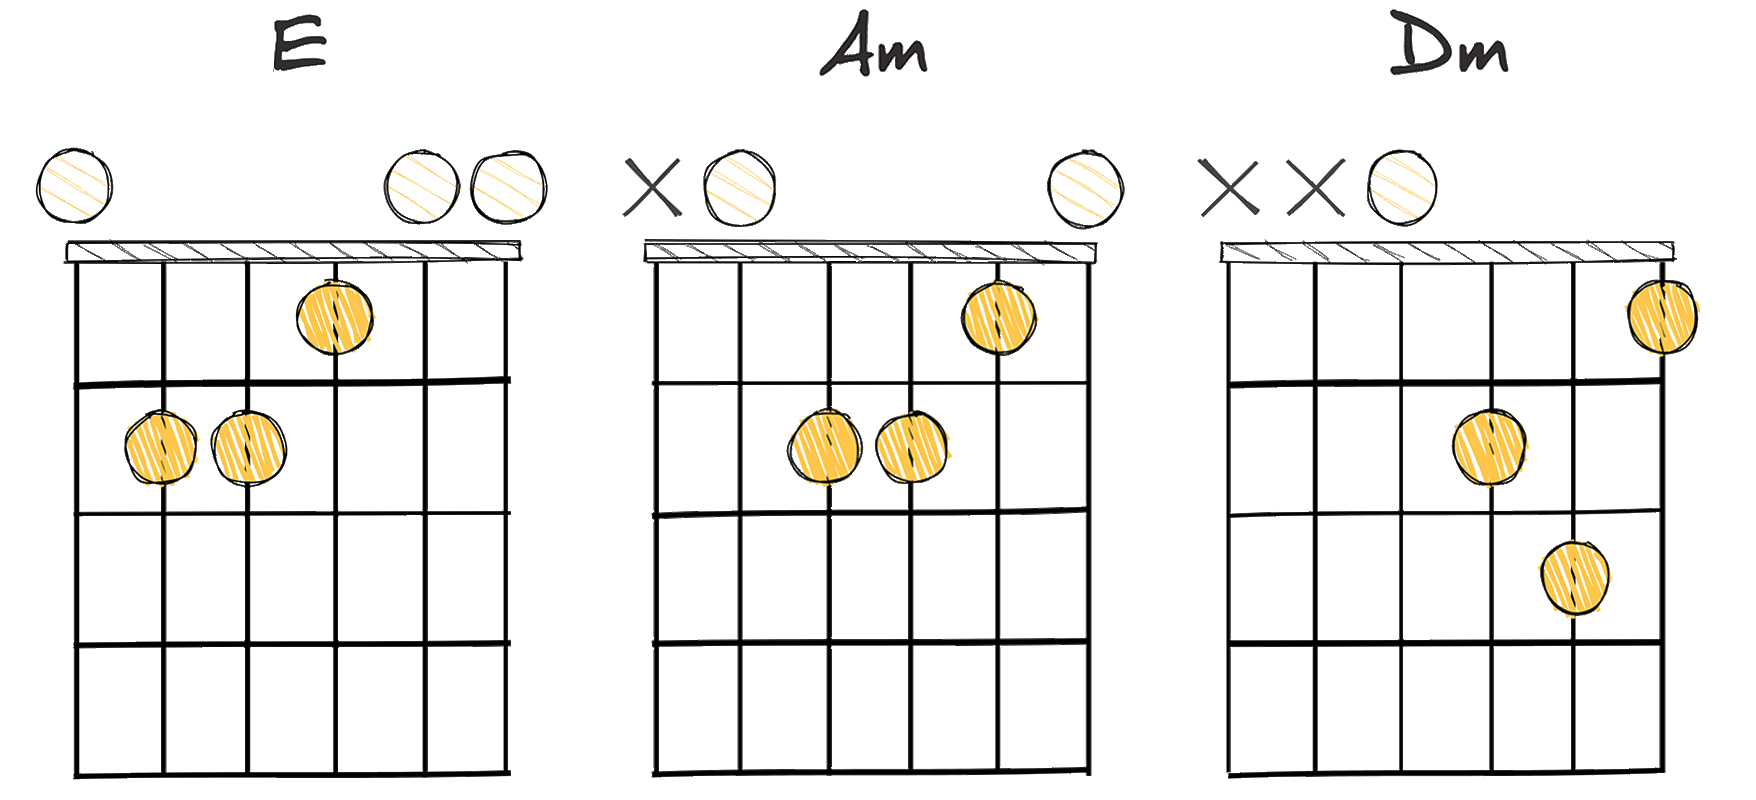 V - i - iv (5 - 1 - 4) chords diagram